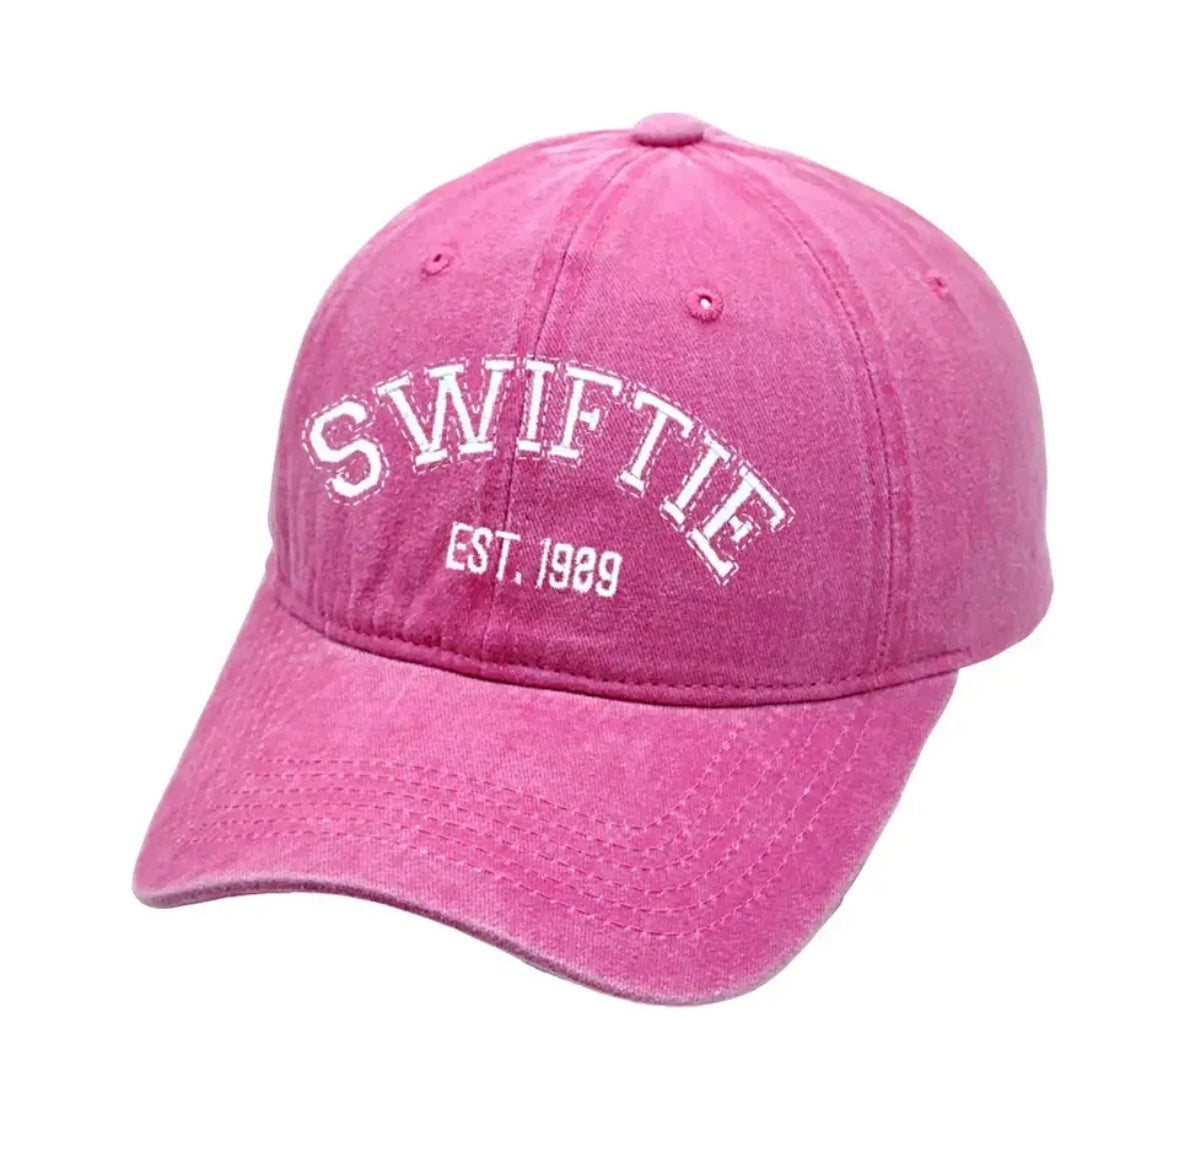 Swiftie Baseball Cap in Rose Pink